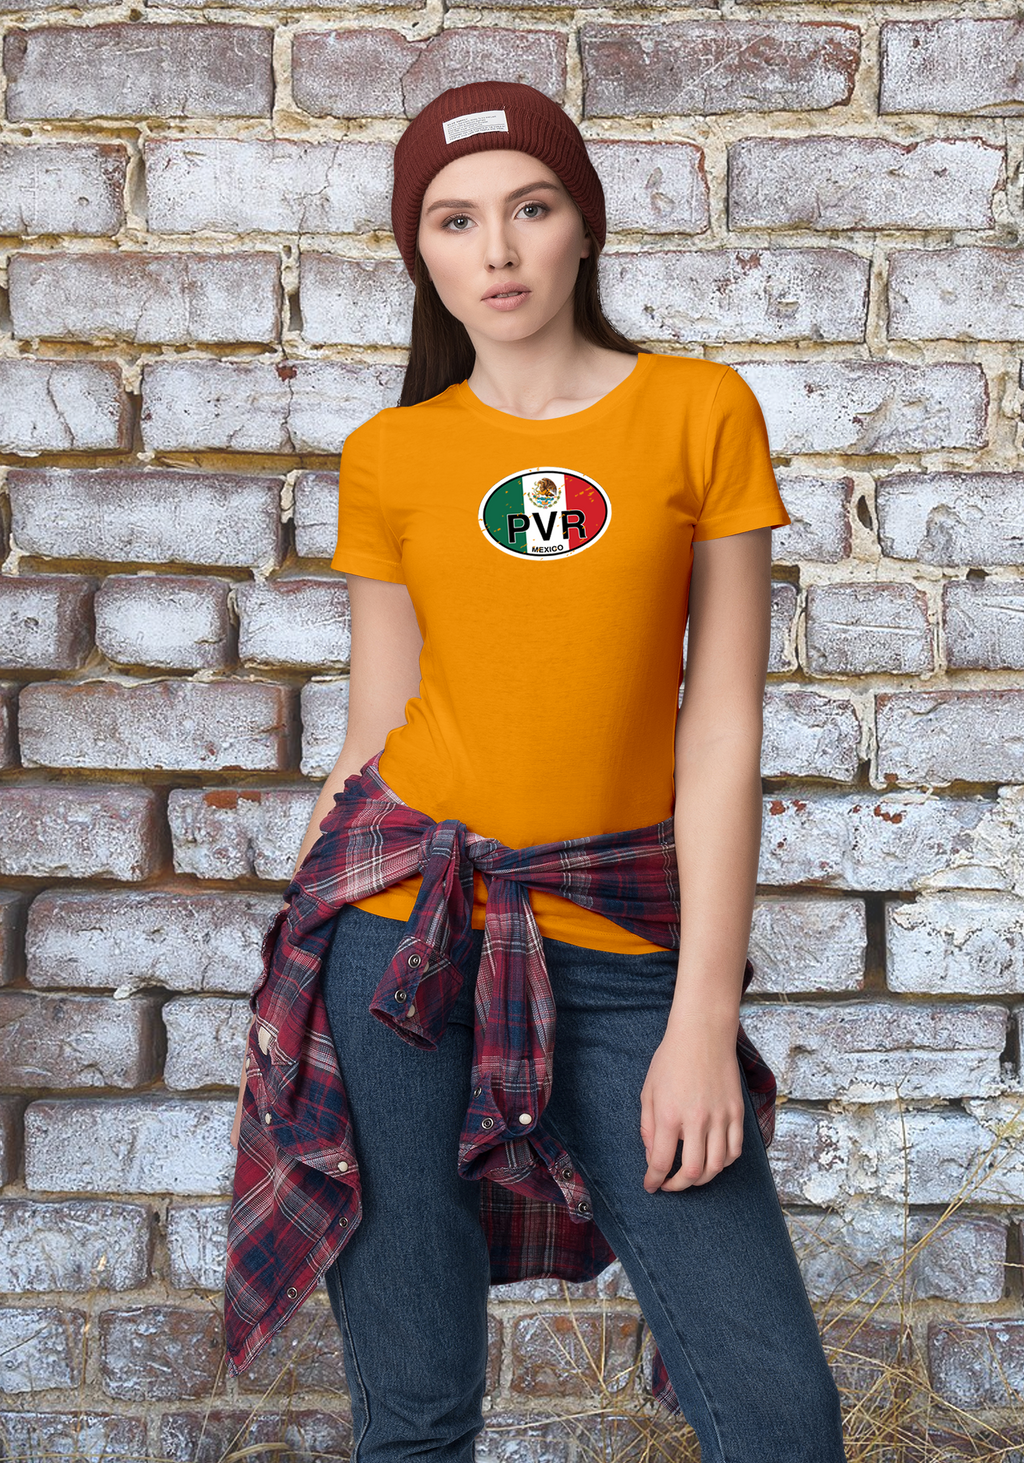 Puerto Vallarta Women's Flag T-Shirt Souvenirs - My Destination Location